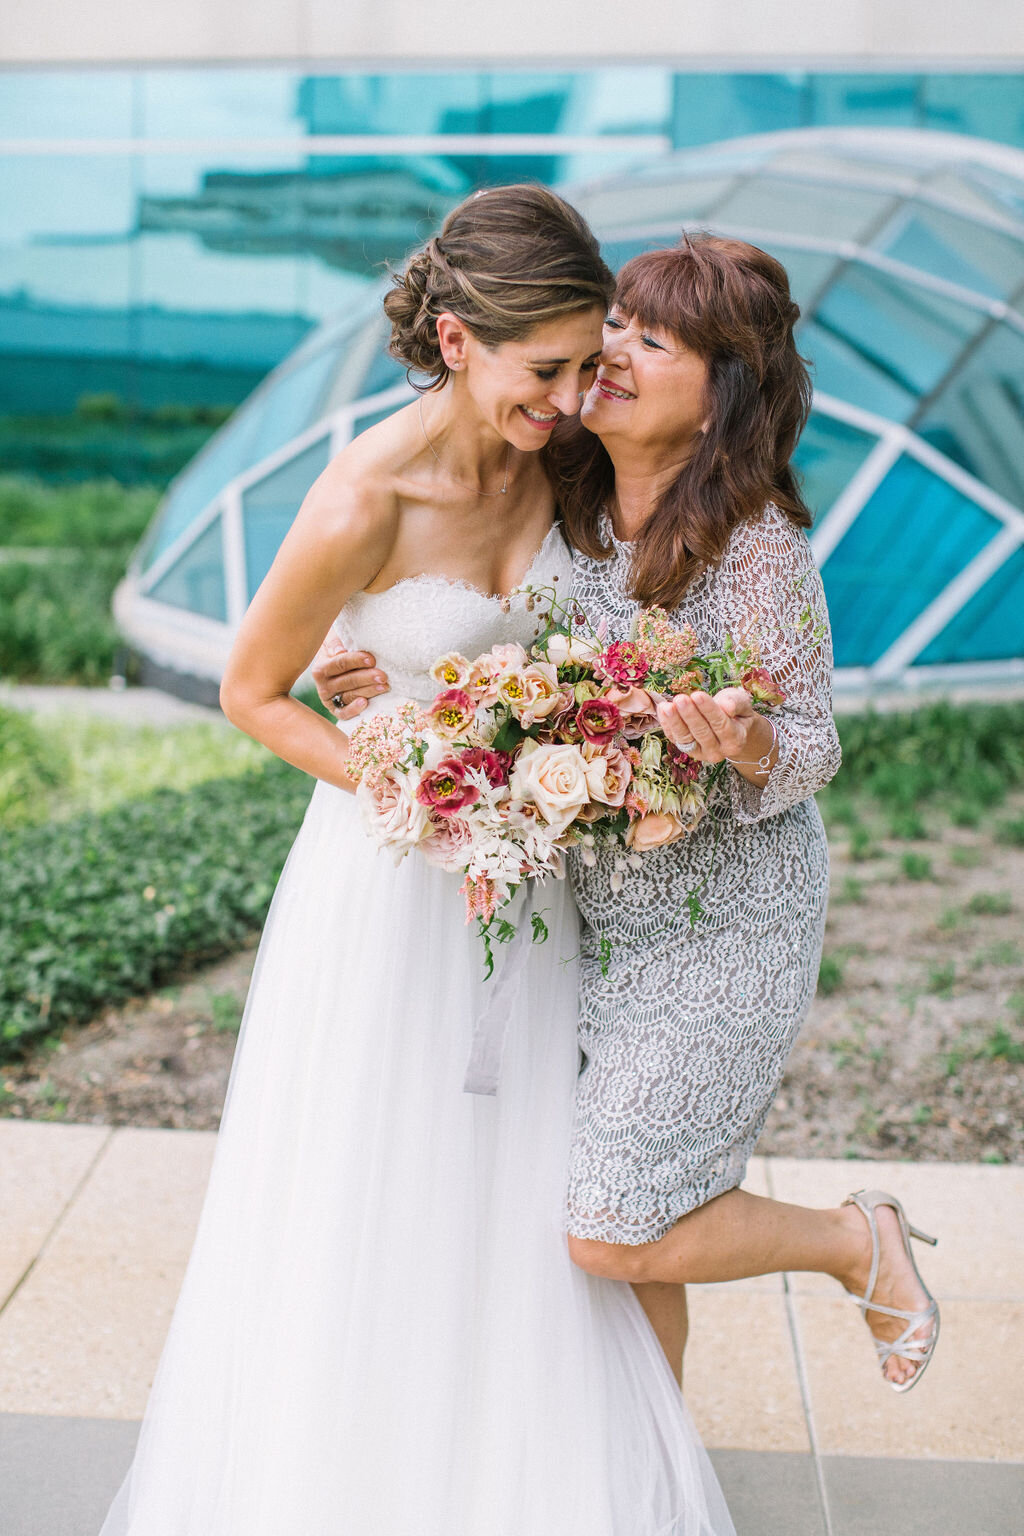 Ellen-Ashton-Photography-Dallas-Wedding-Photographers-Girt-and-gold-events-weddings4.jpg